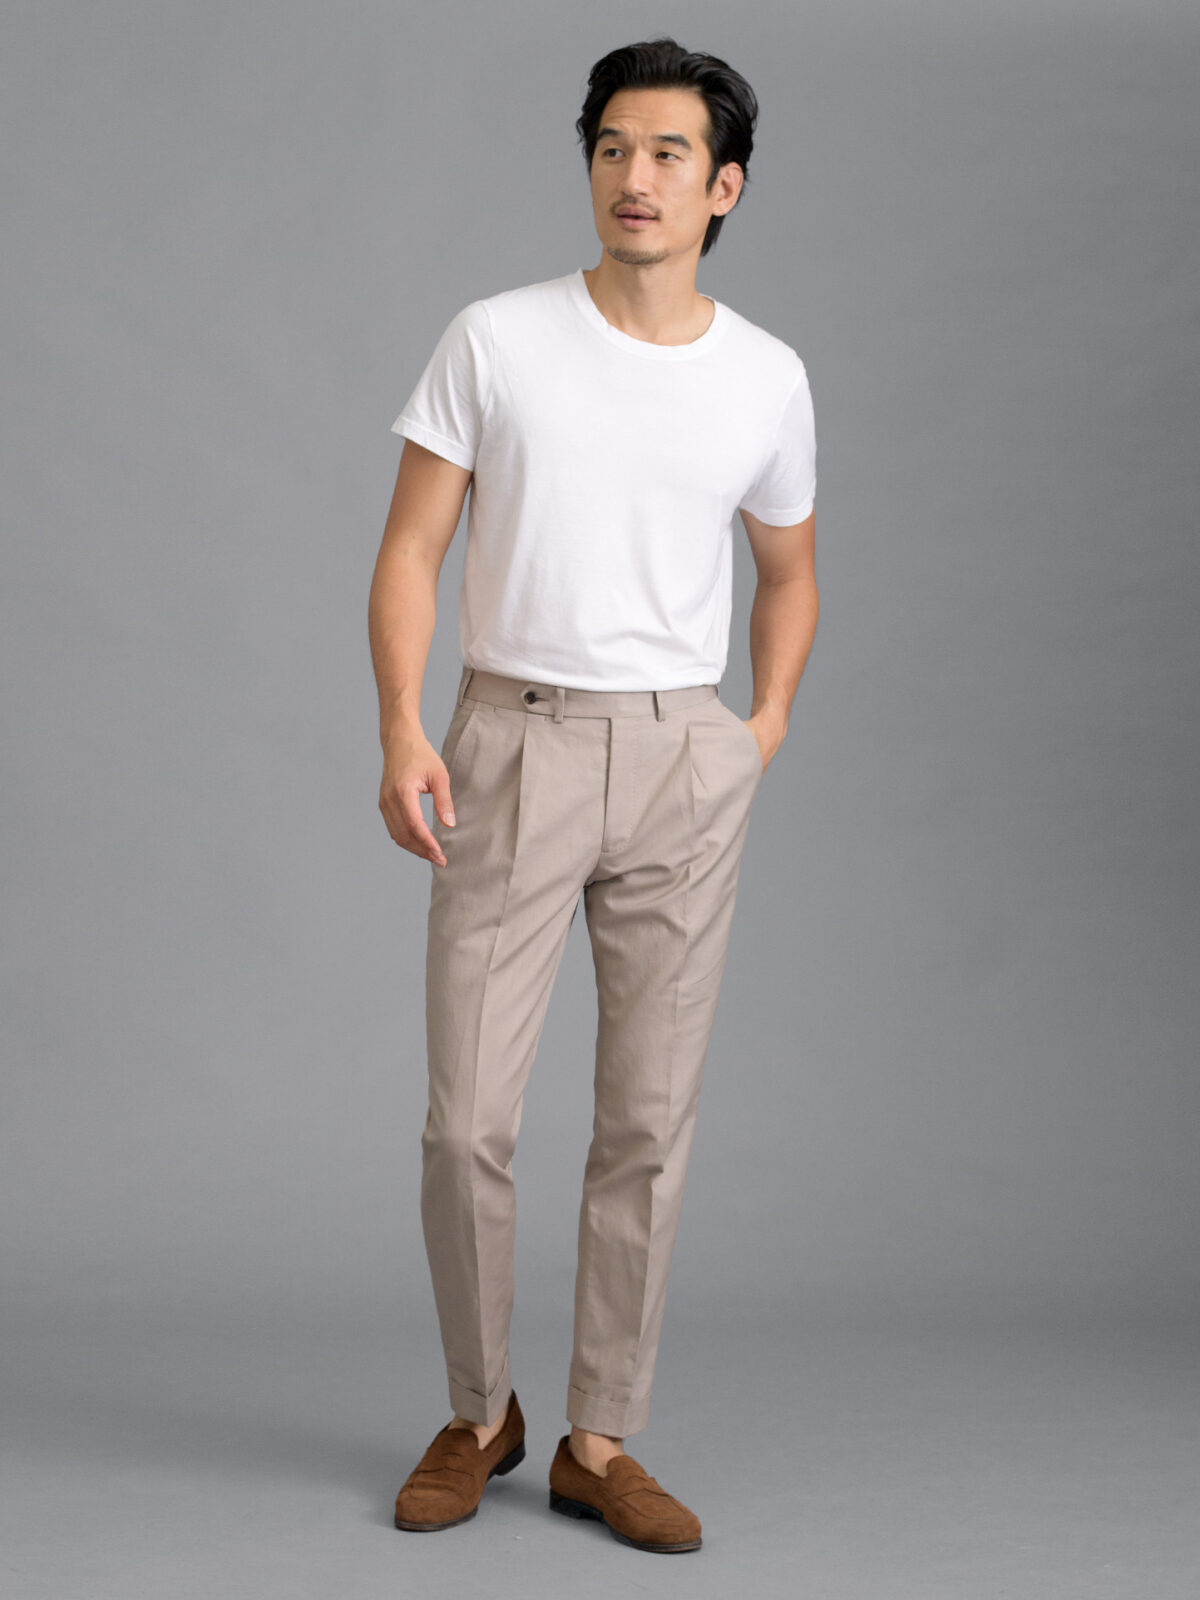 Best Dress Pants for Men 2023: Where to Buy Men's Trousers Online